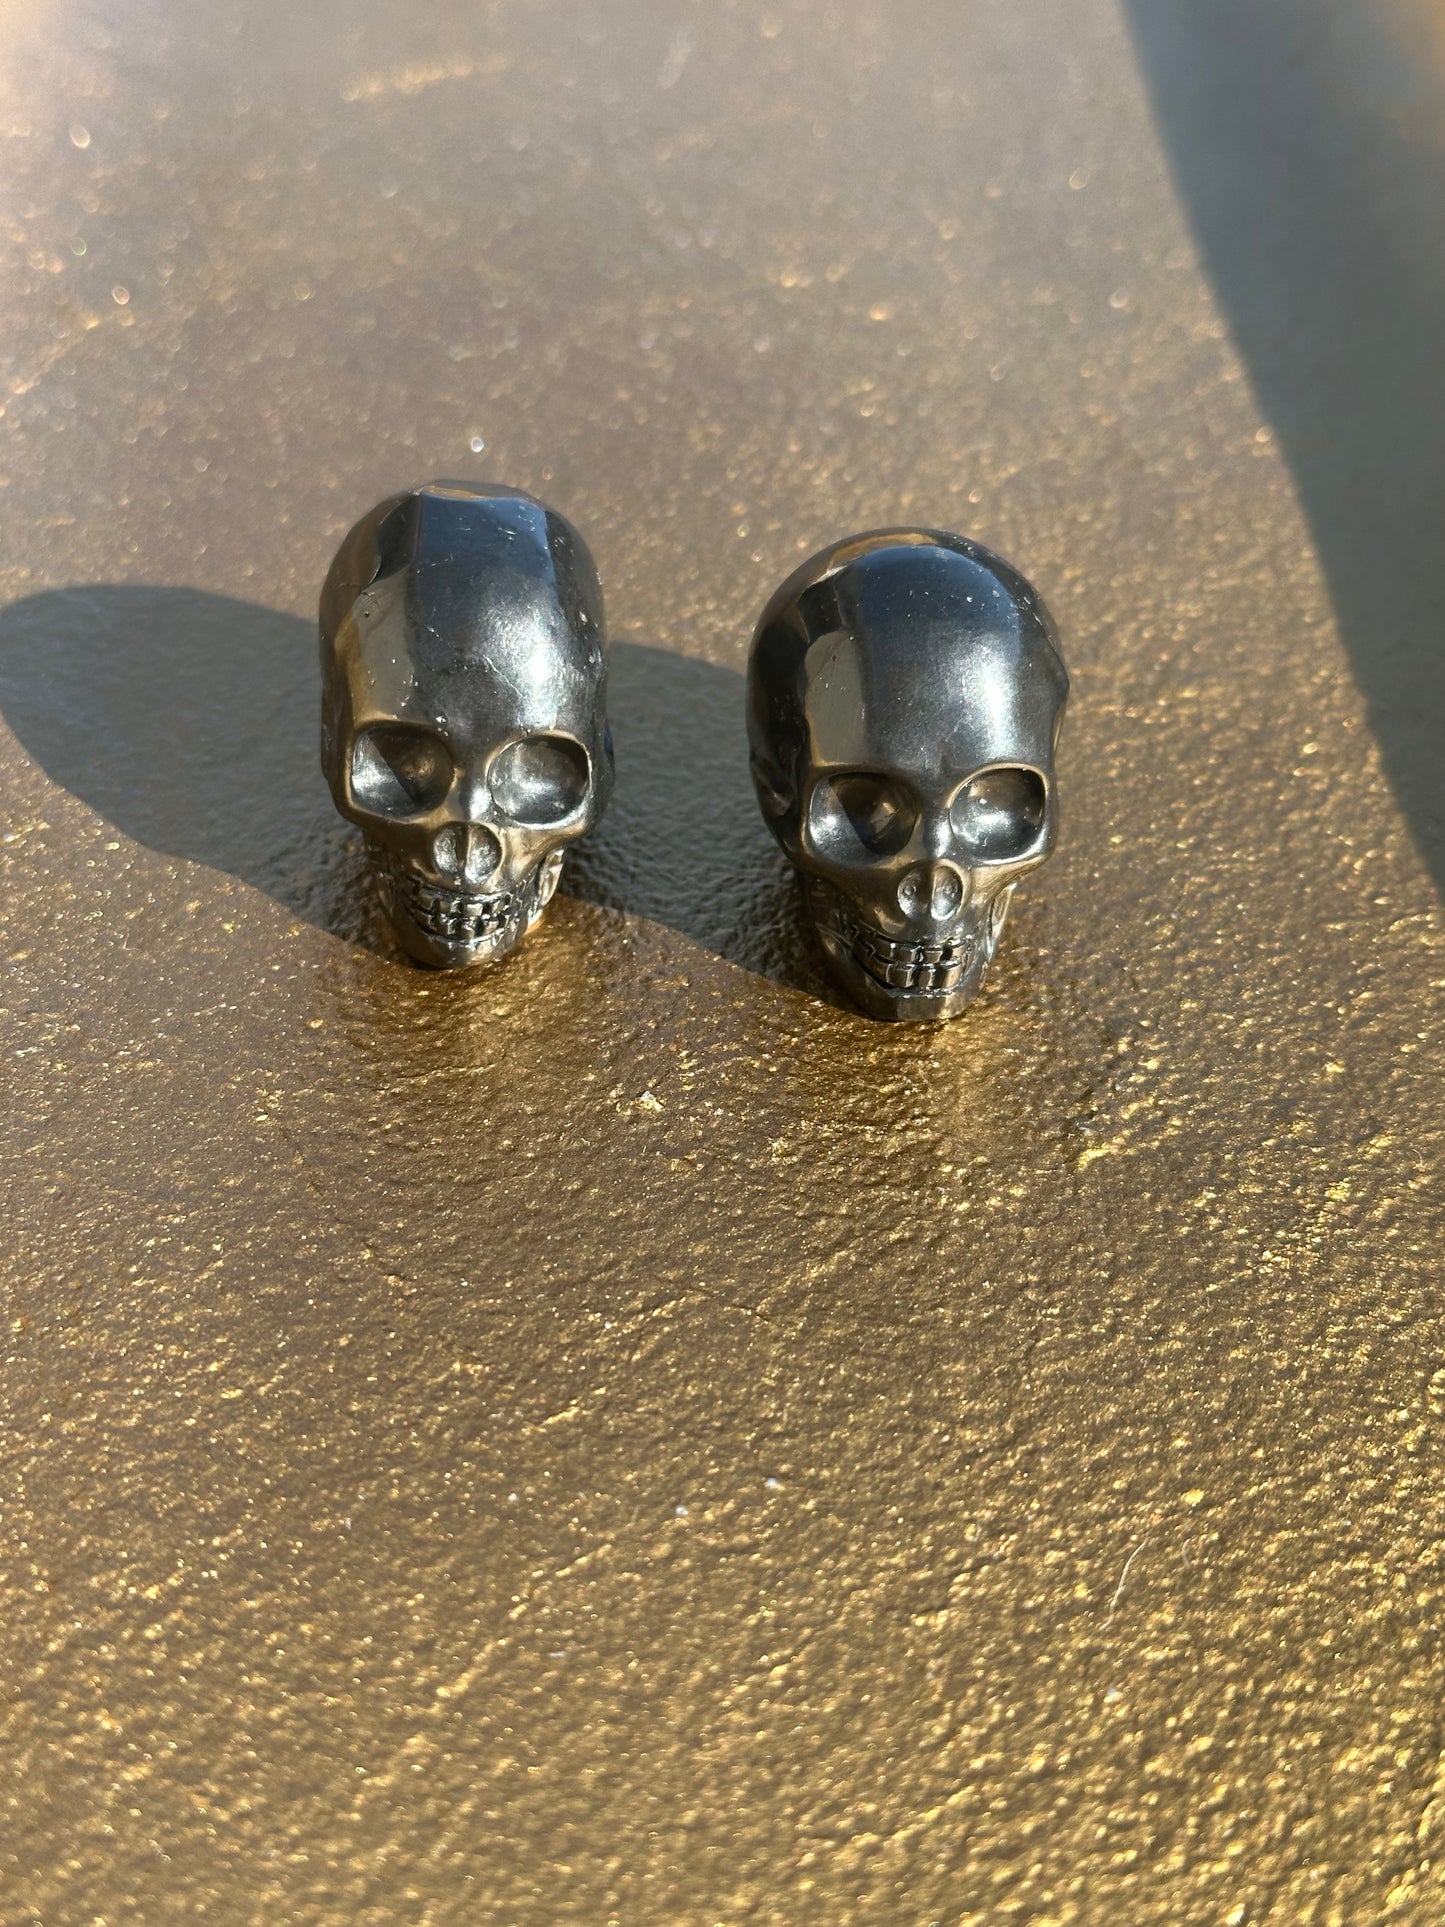 Mini Shungite Skulls (EMF Protection)